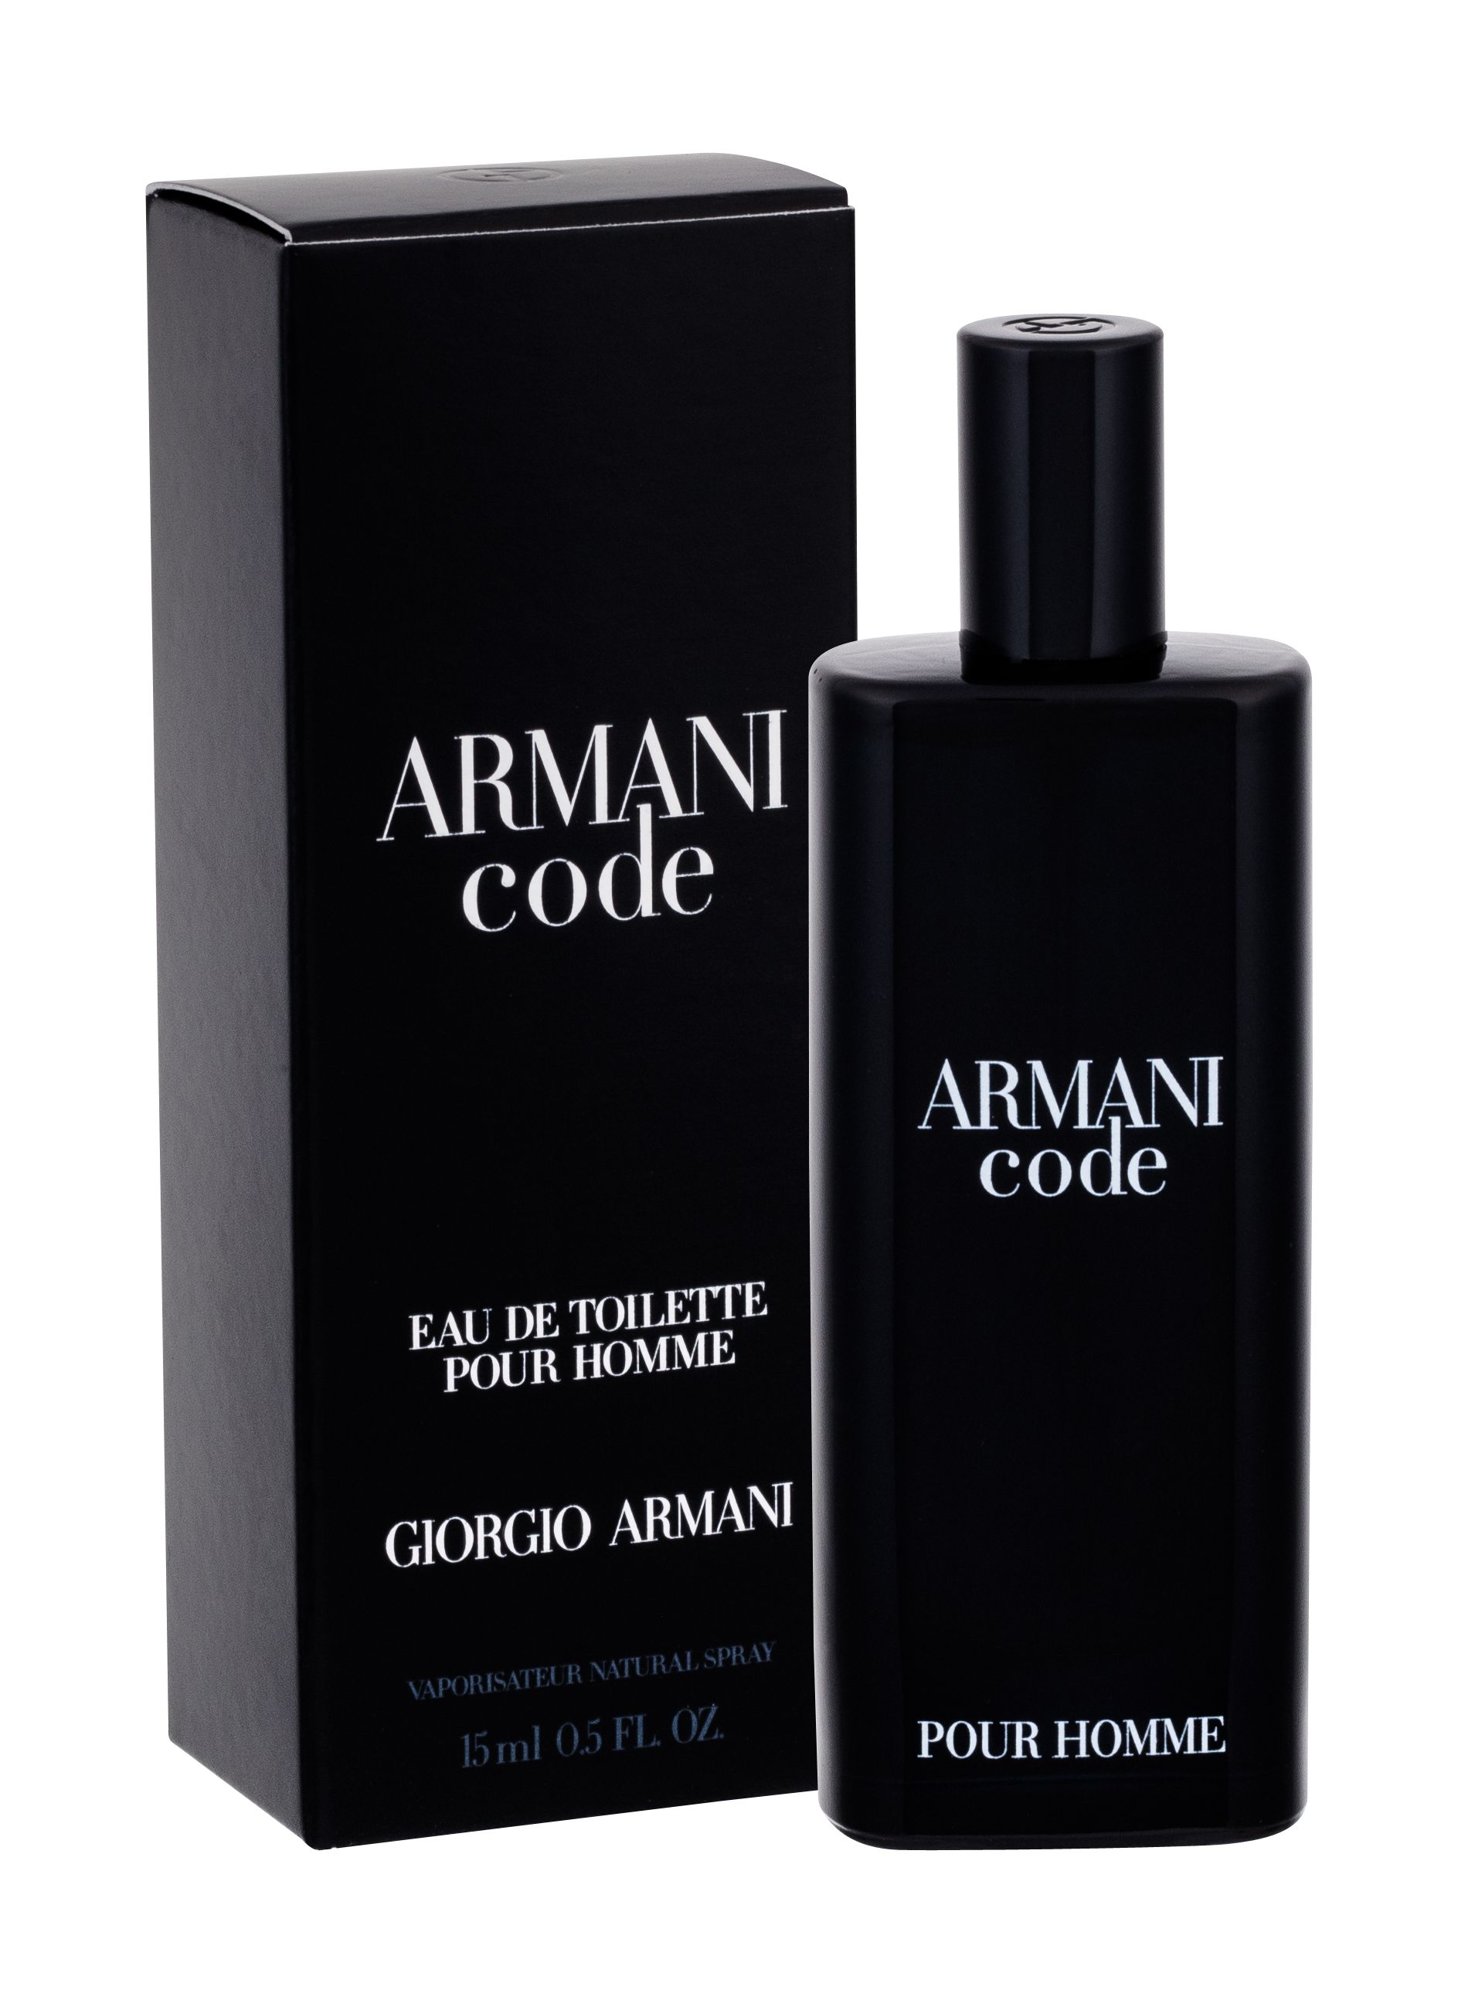 Armani code homme